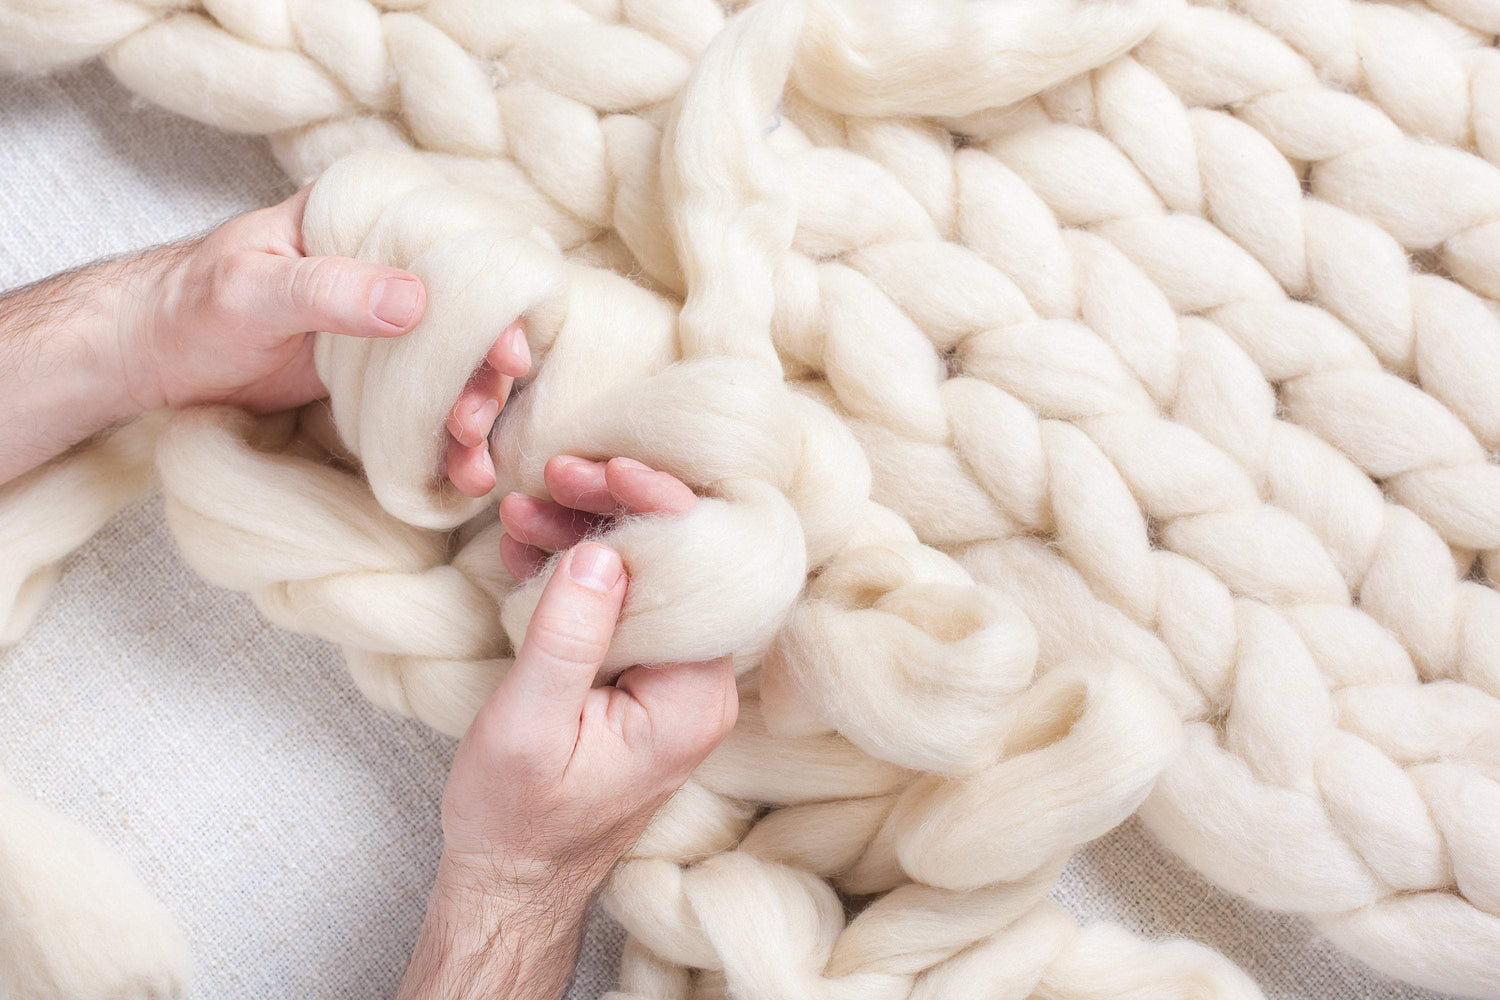 10Ibs Chunky yarn DIY super chunky wool,chunky knit yarn,merino wool  yarn,giant